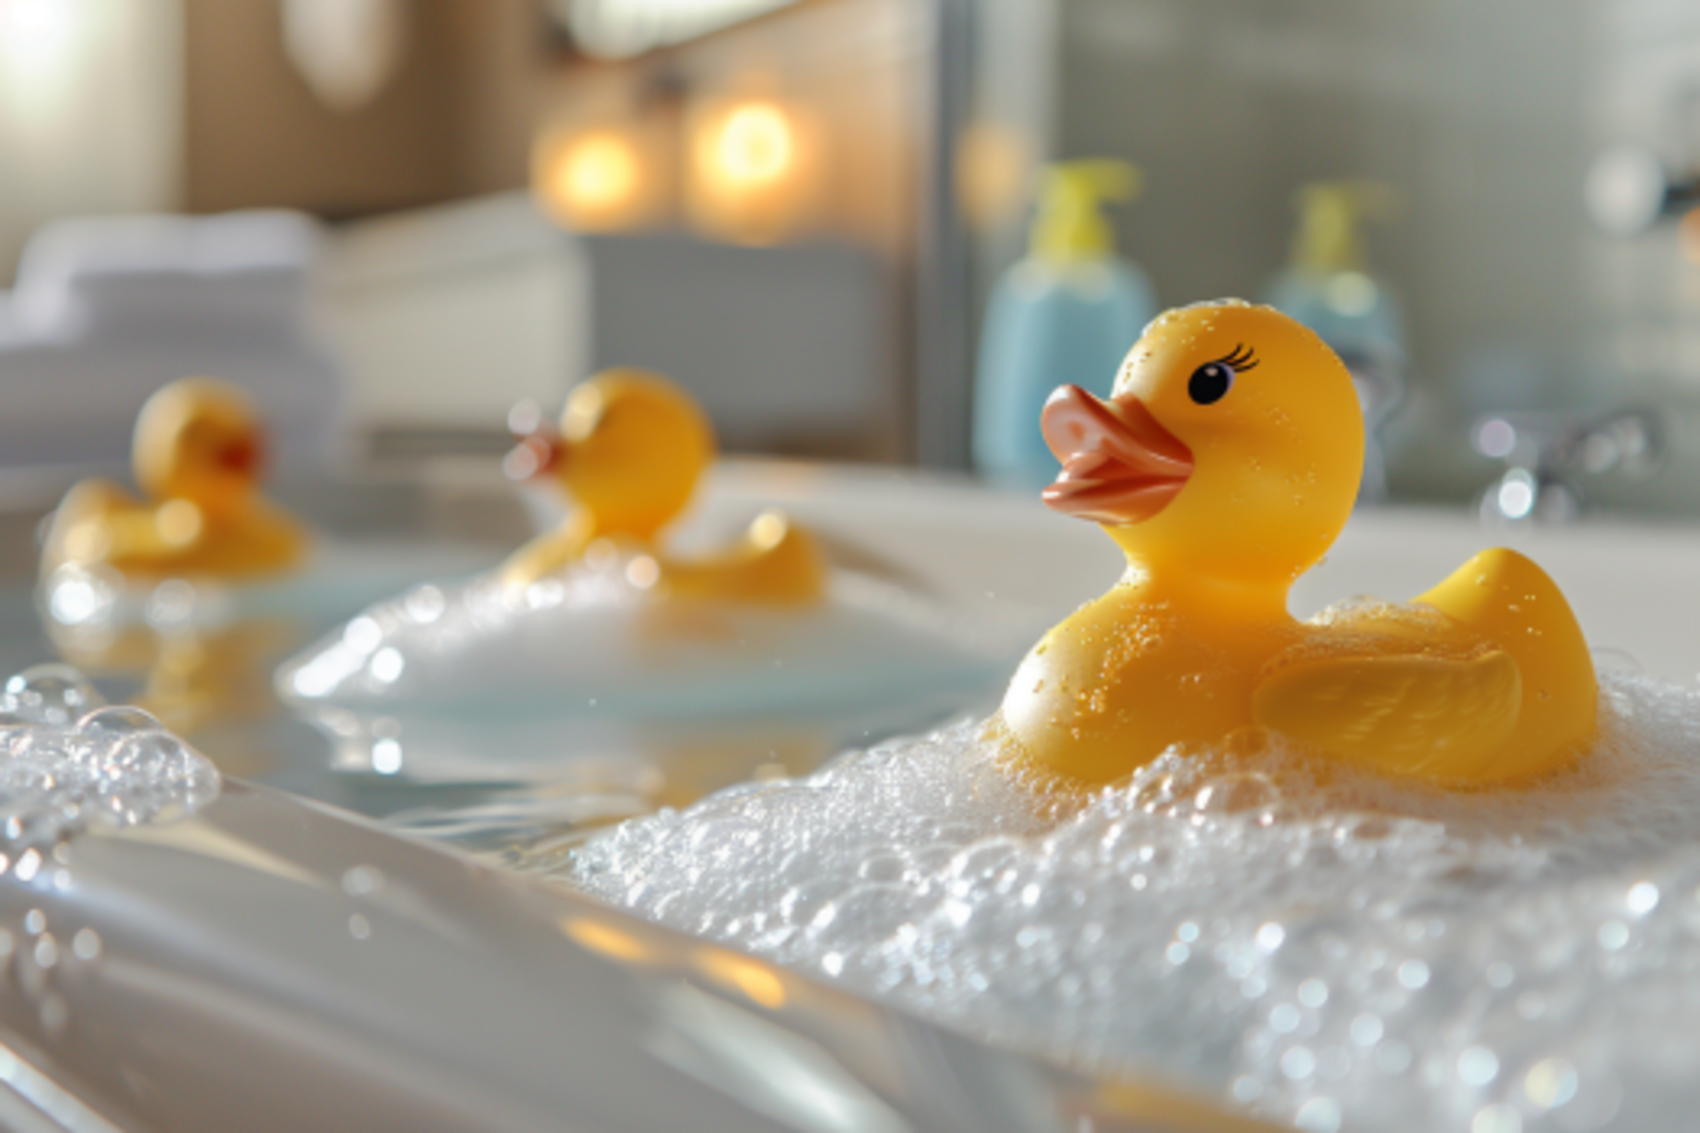 Rubber ducks in a soapy bathtub | Source: Midjourney